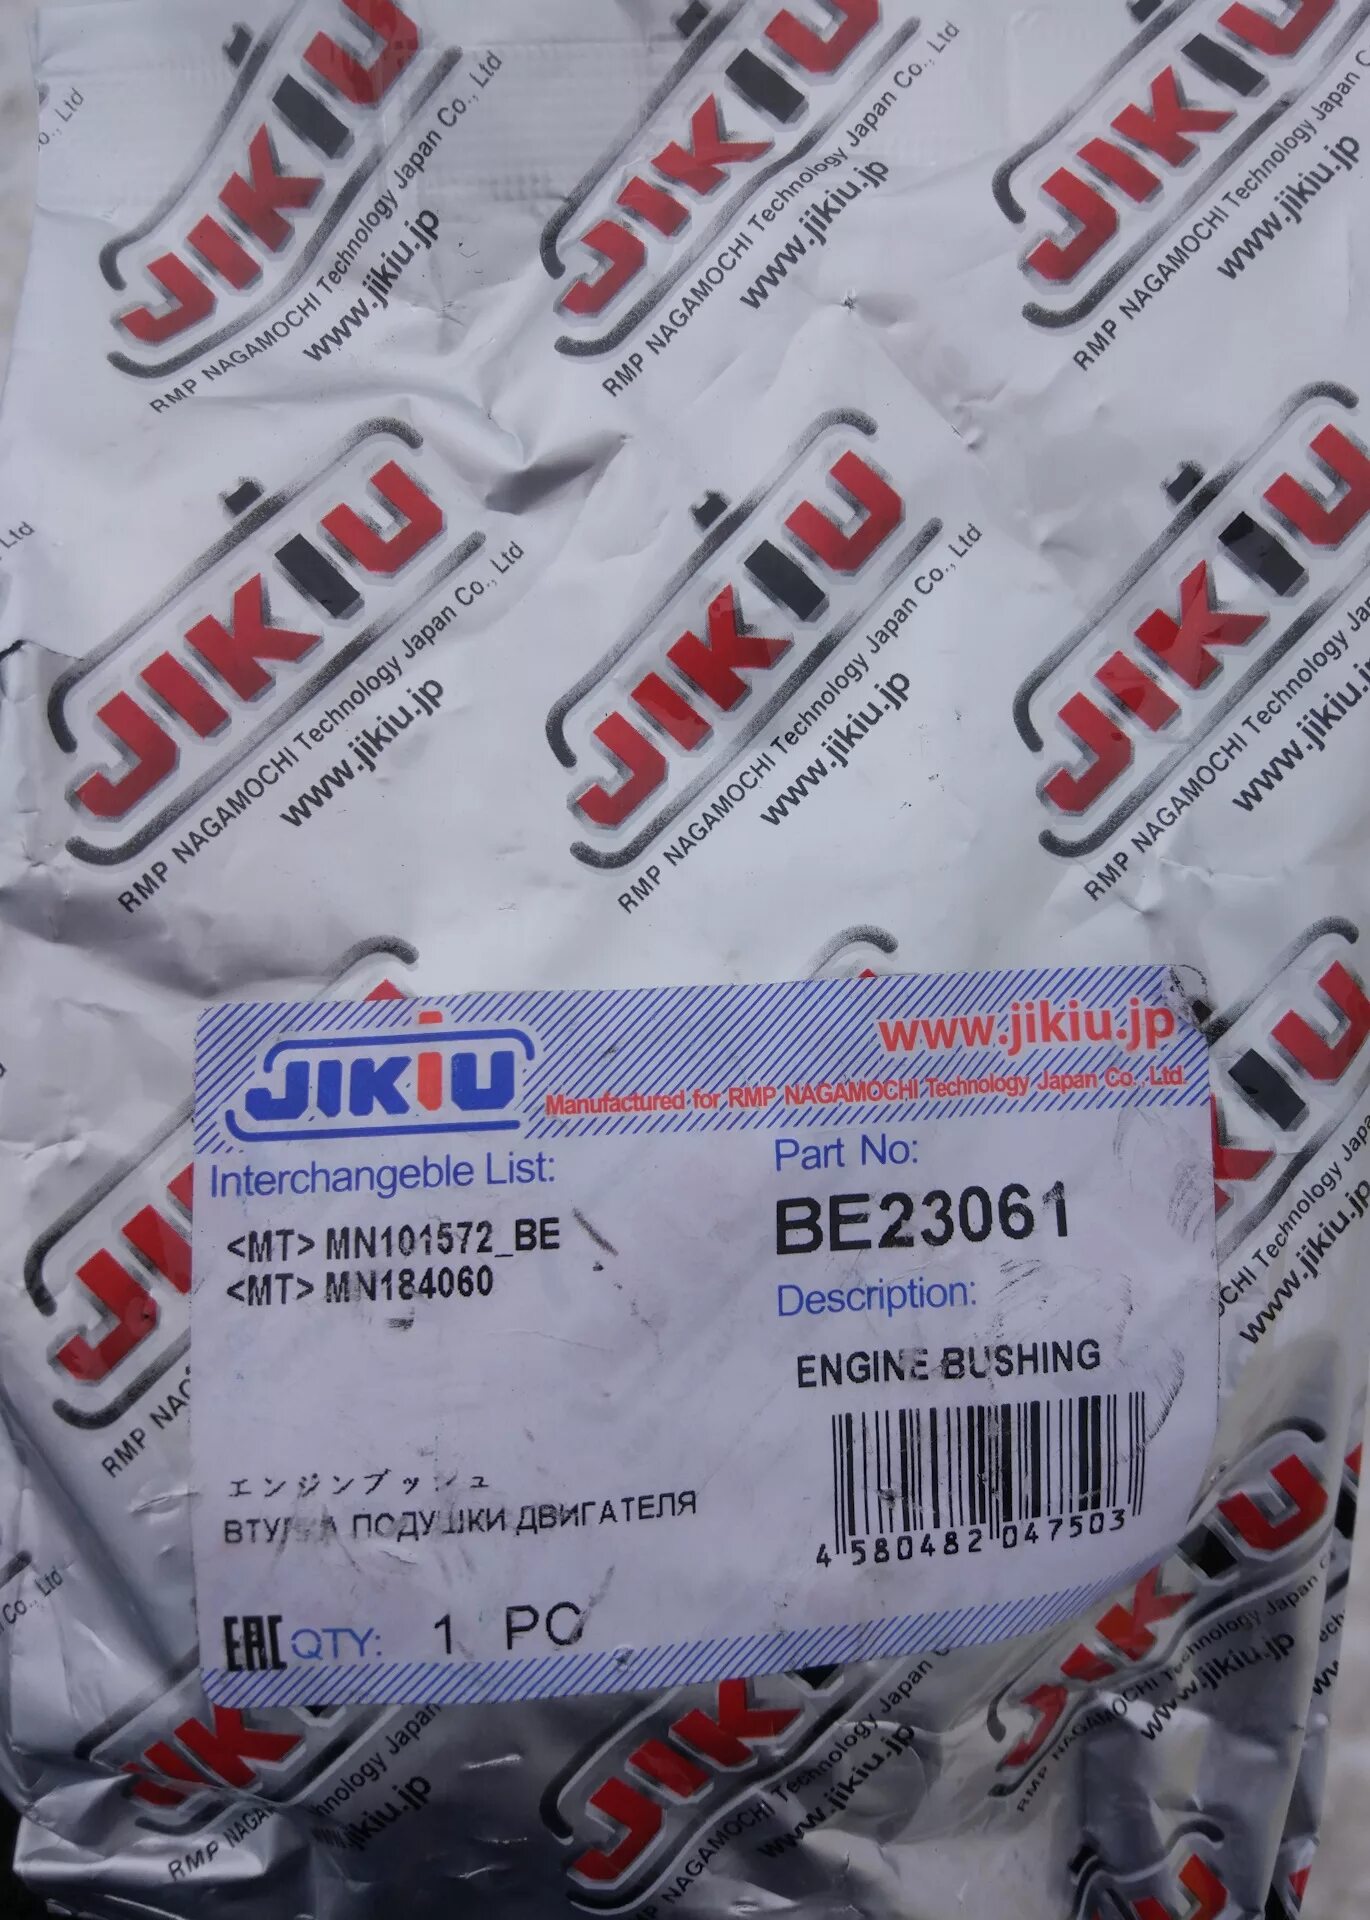 Jikiu страна производитель. Be23061 JIKIU. Be23061 размер. Mn184060.